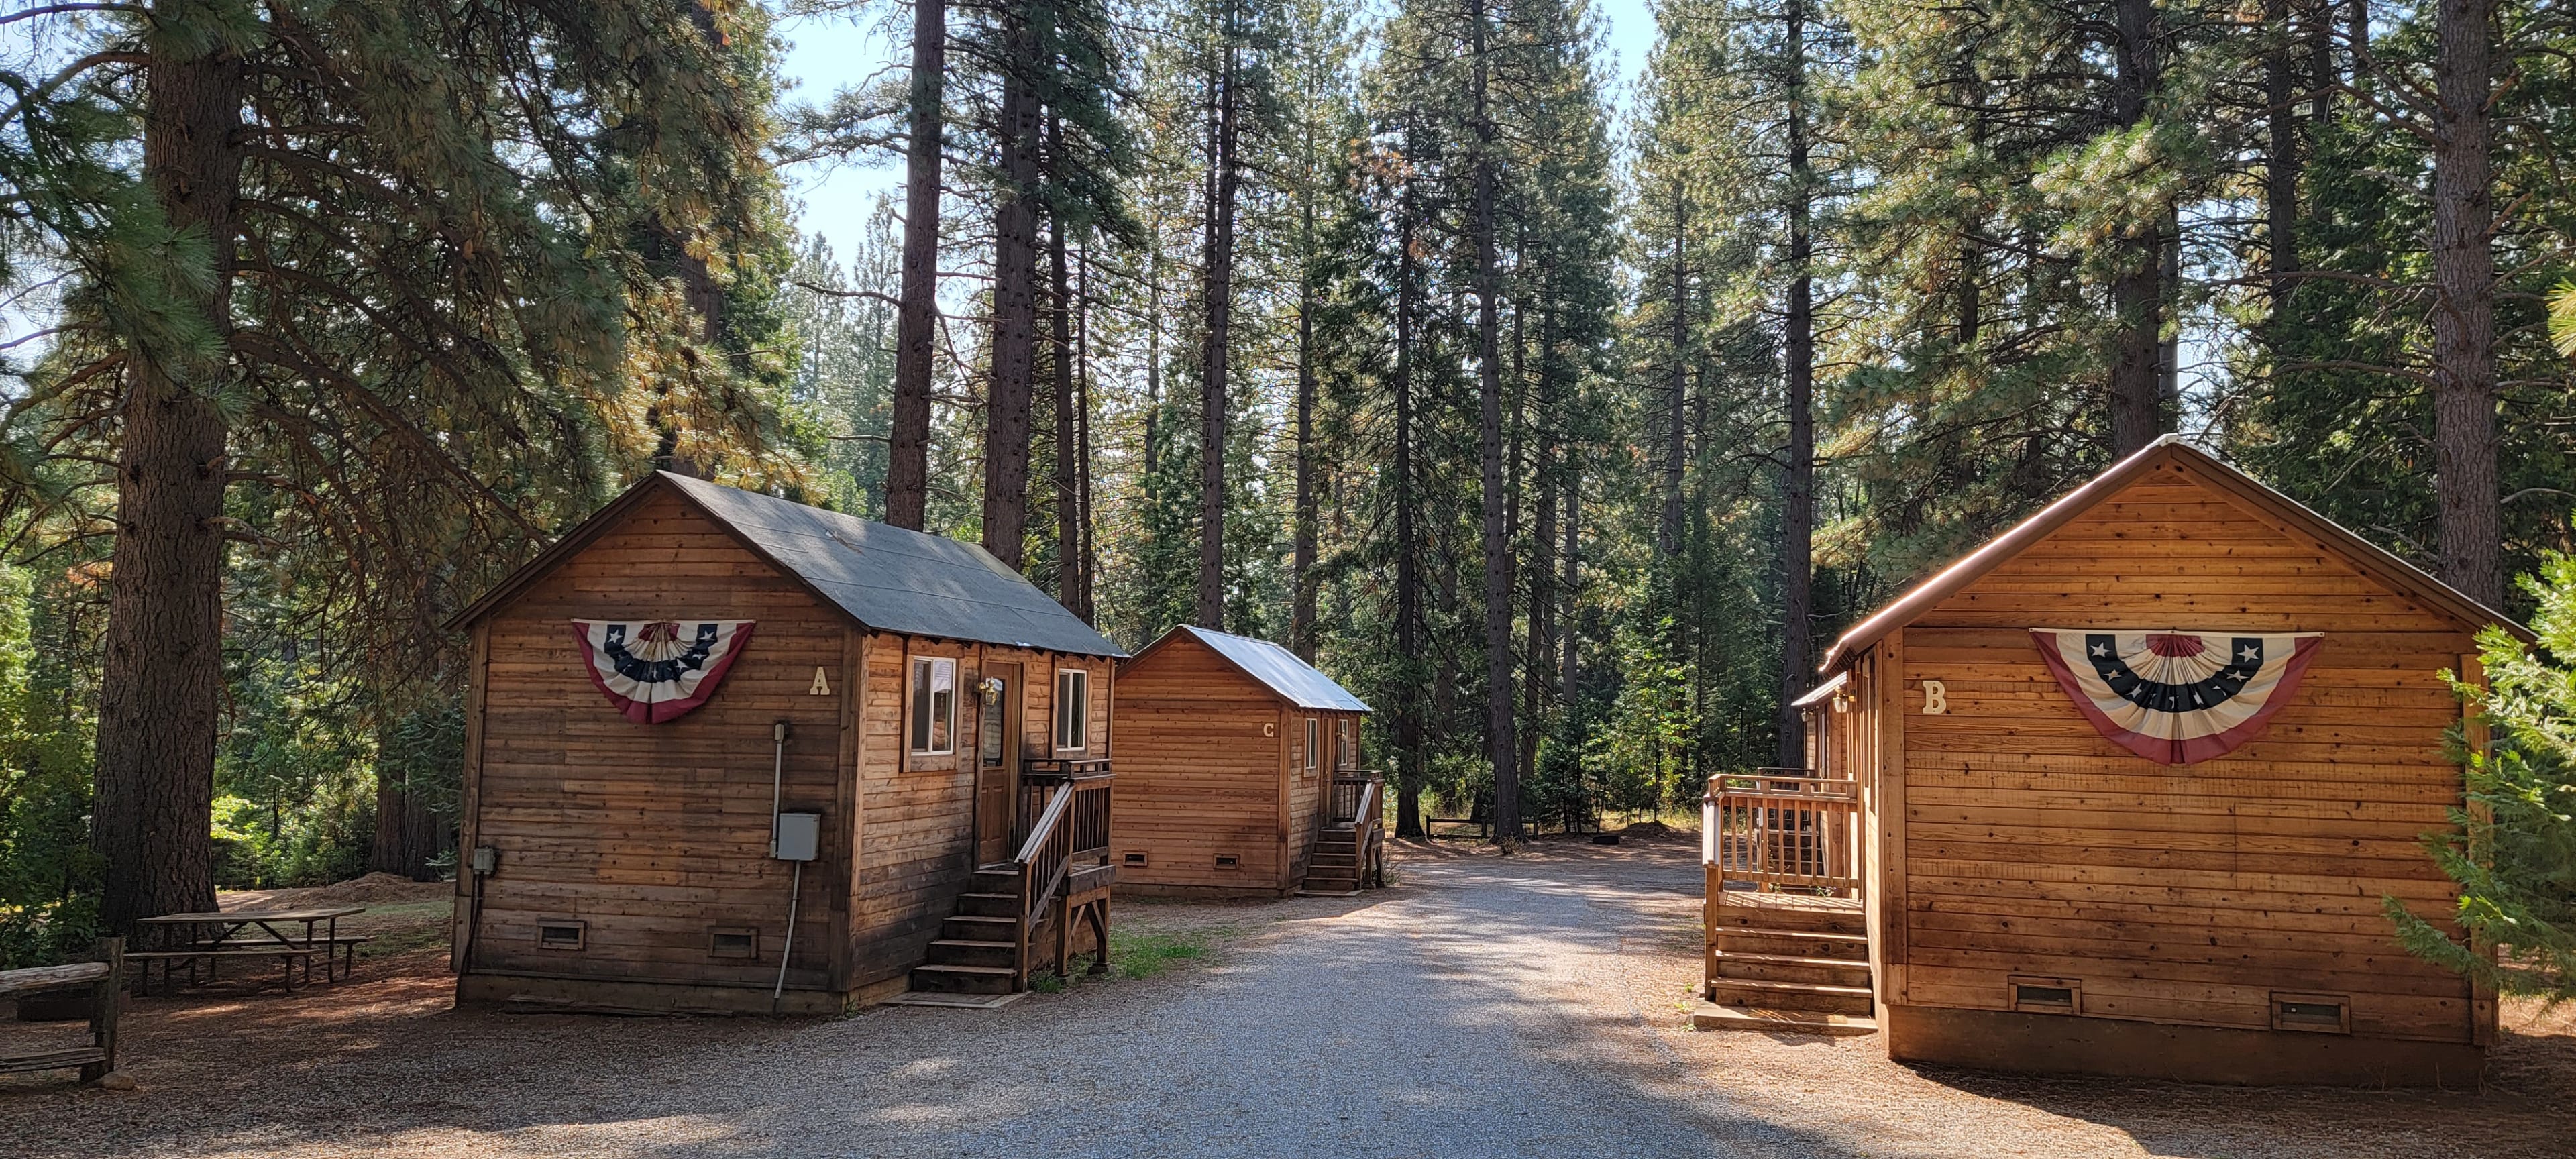 Camping Cabin A, Creek Lake, Lassen